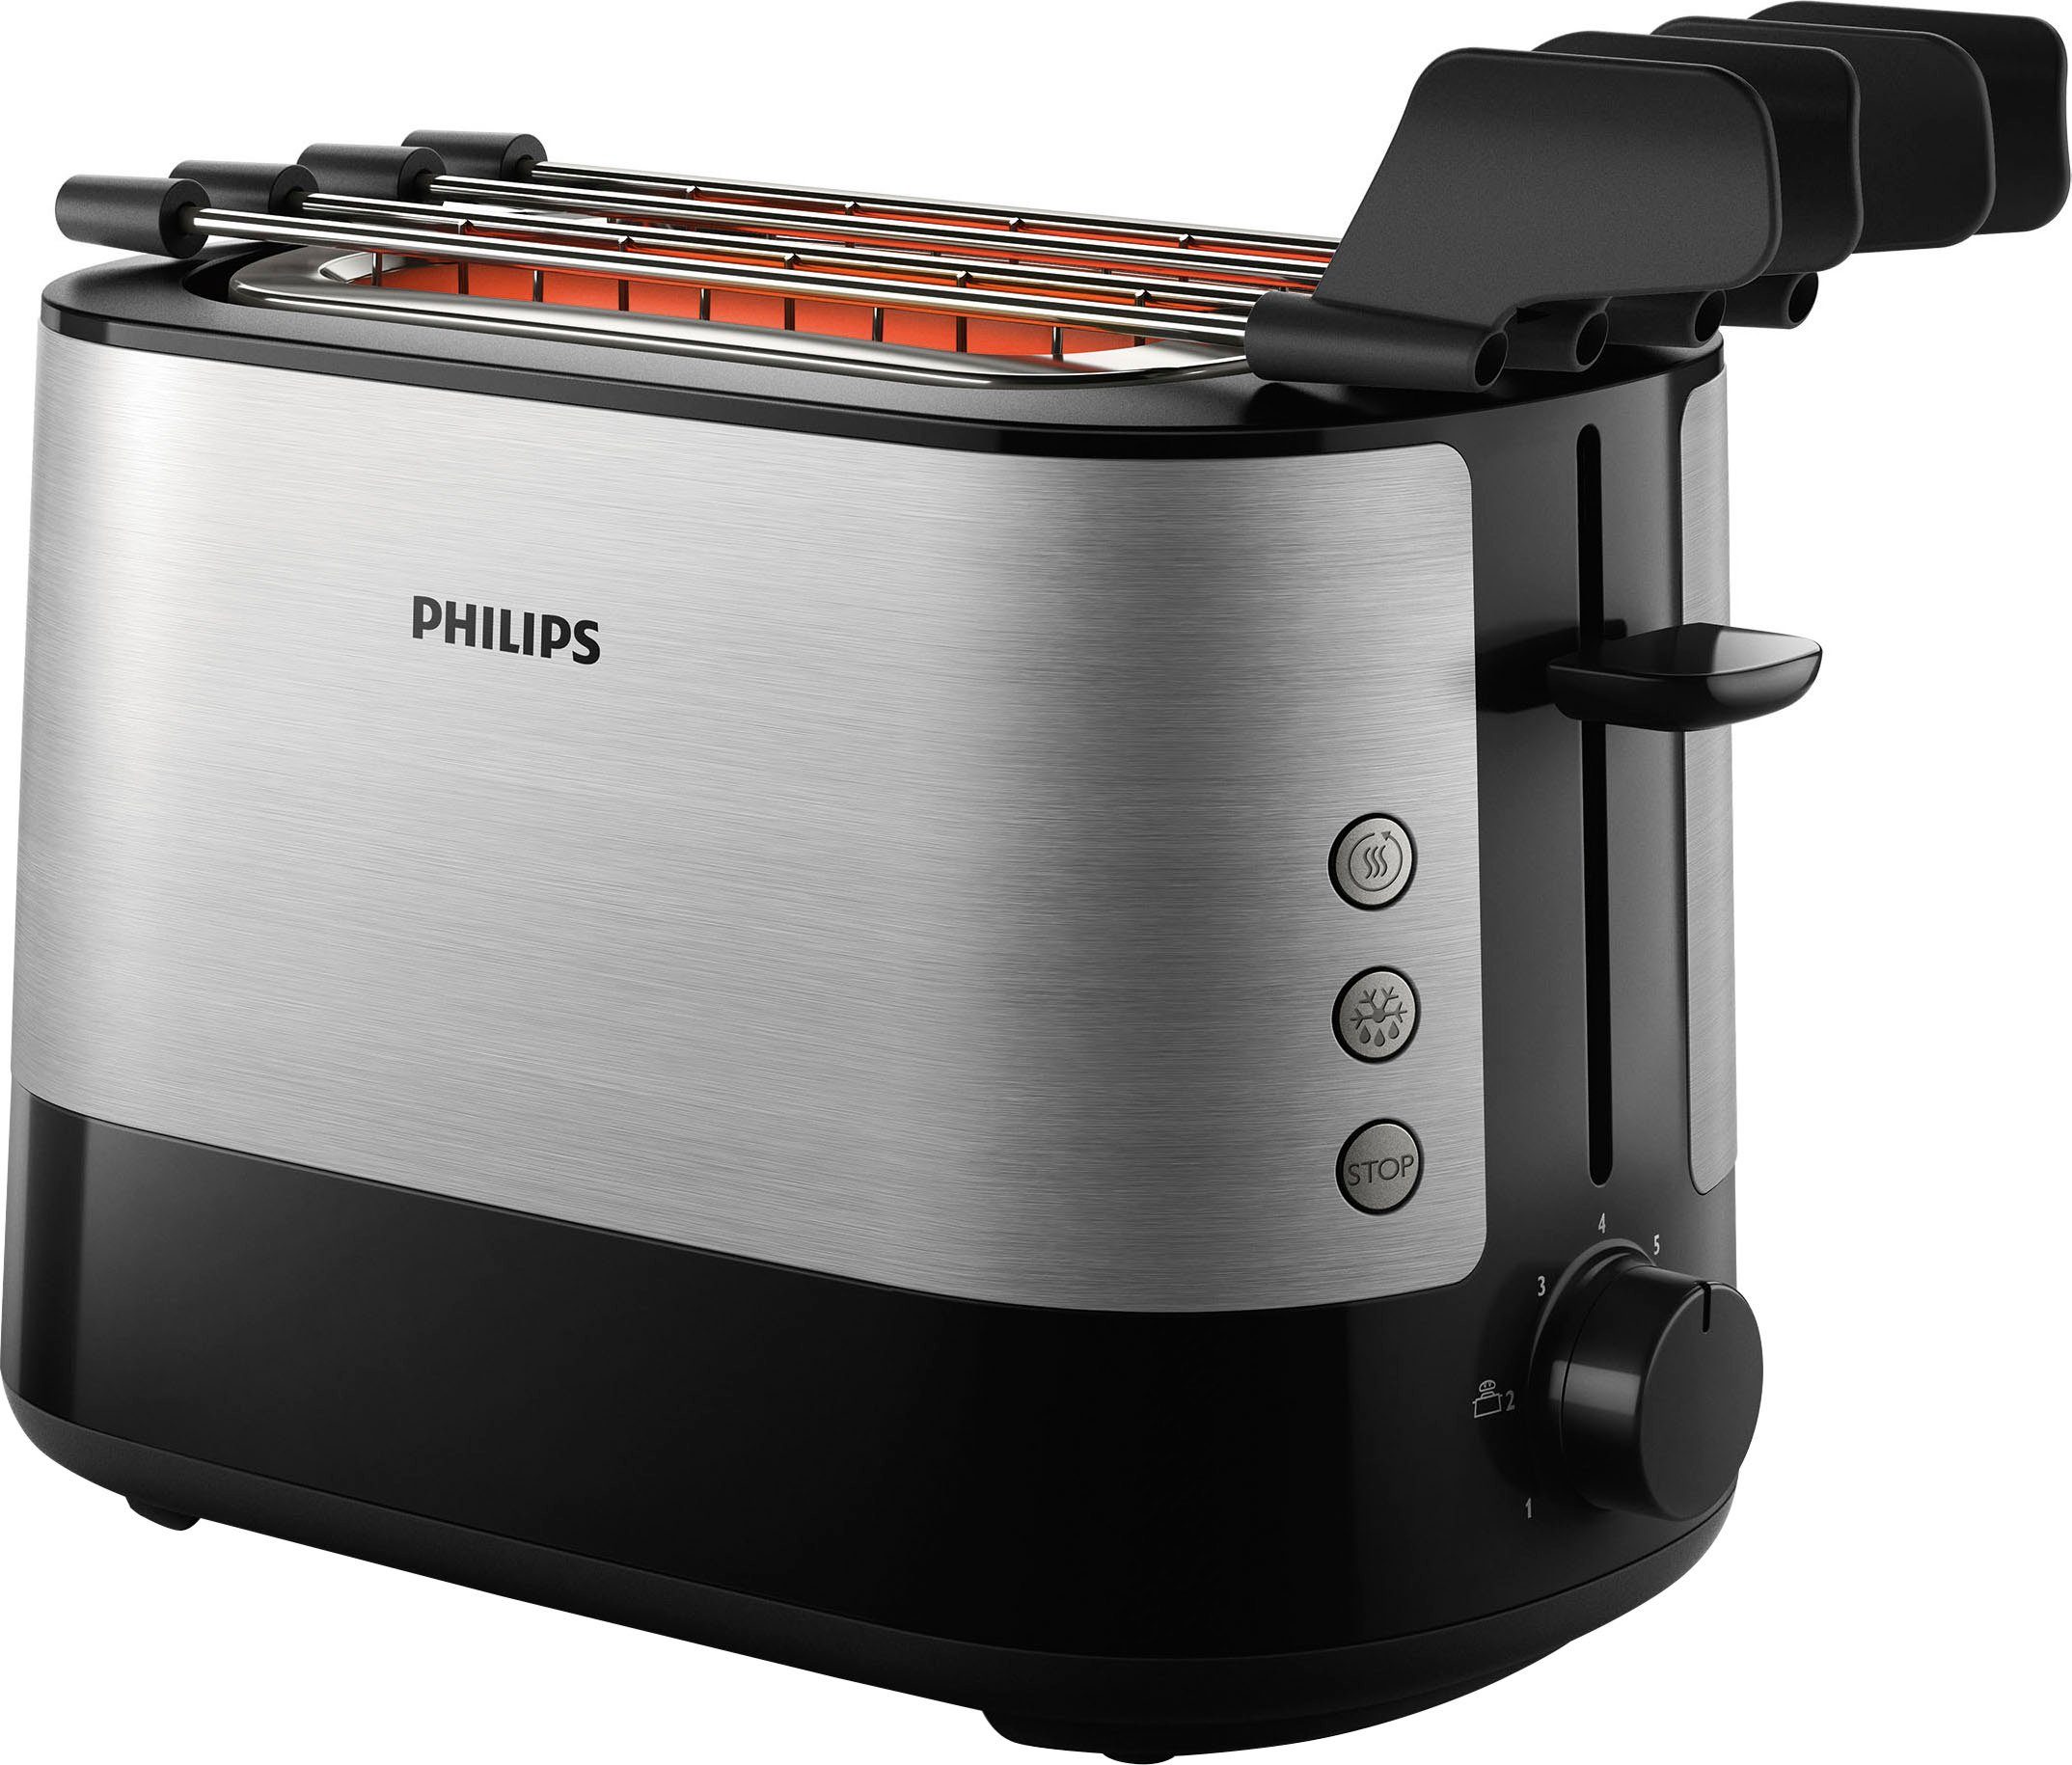 Philips Toaster HD2639/90, 730 W | Langschlitztoaster